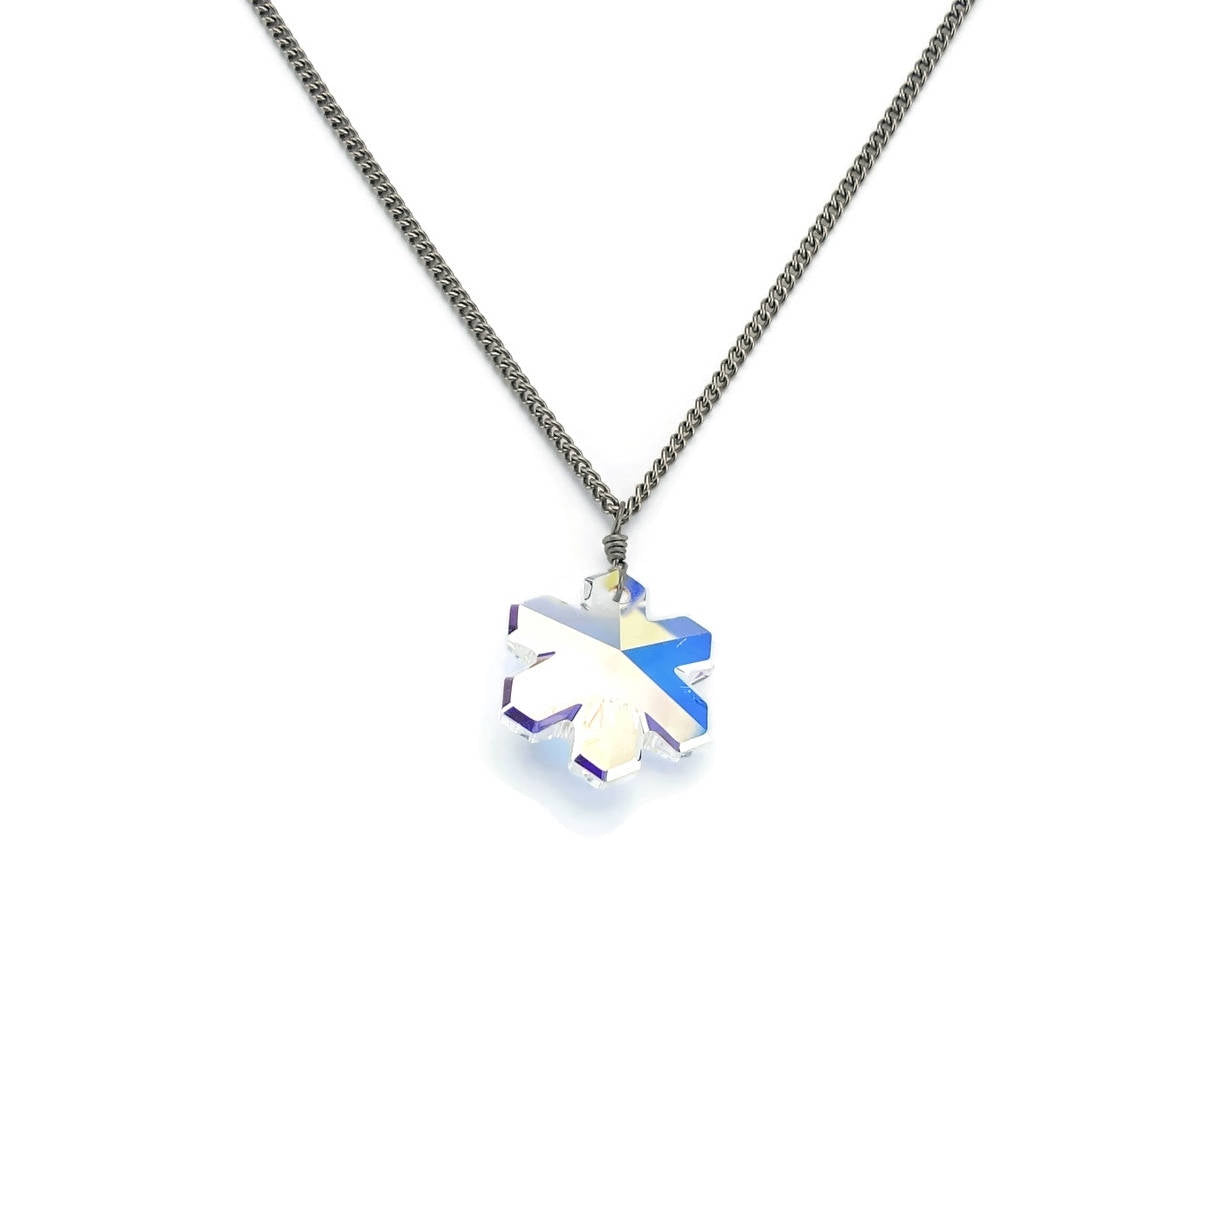 Aurora Borealis Snowflake Necklace, Pure Titanium Chain Necklace For Sensitive Skin, Swarovski Crystal, Hypoallergenic Nickel Free Niobium